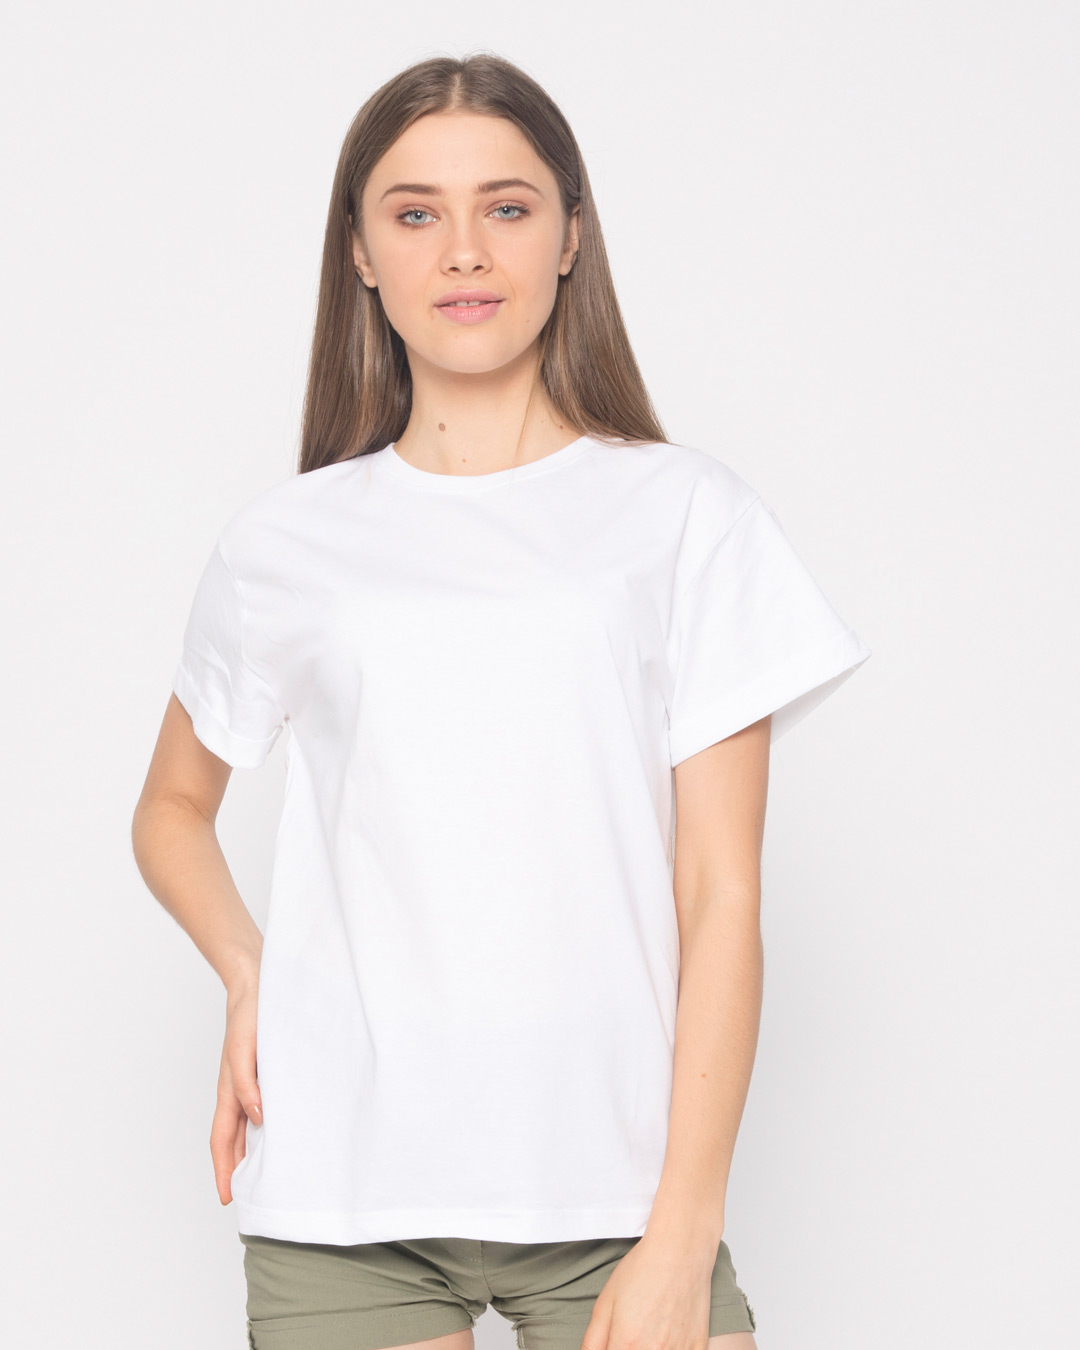 White T-Shirt - Sportee Gym & Pilates T-Shirt - White / free for ...